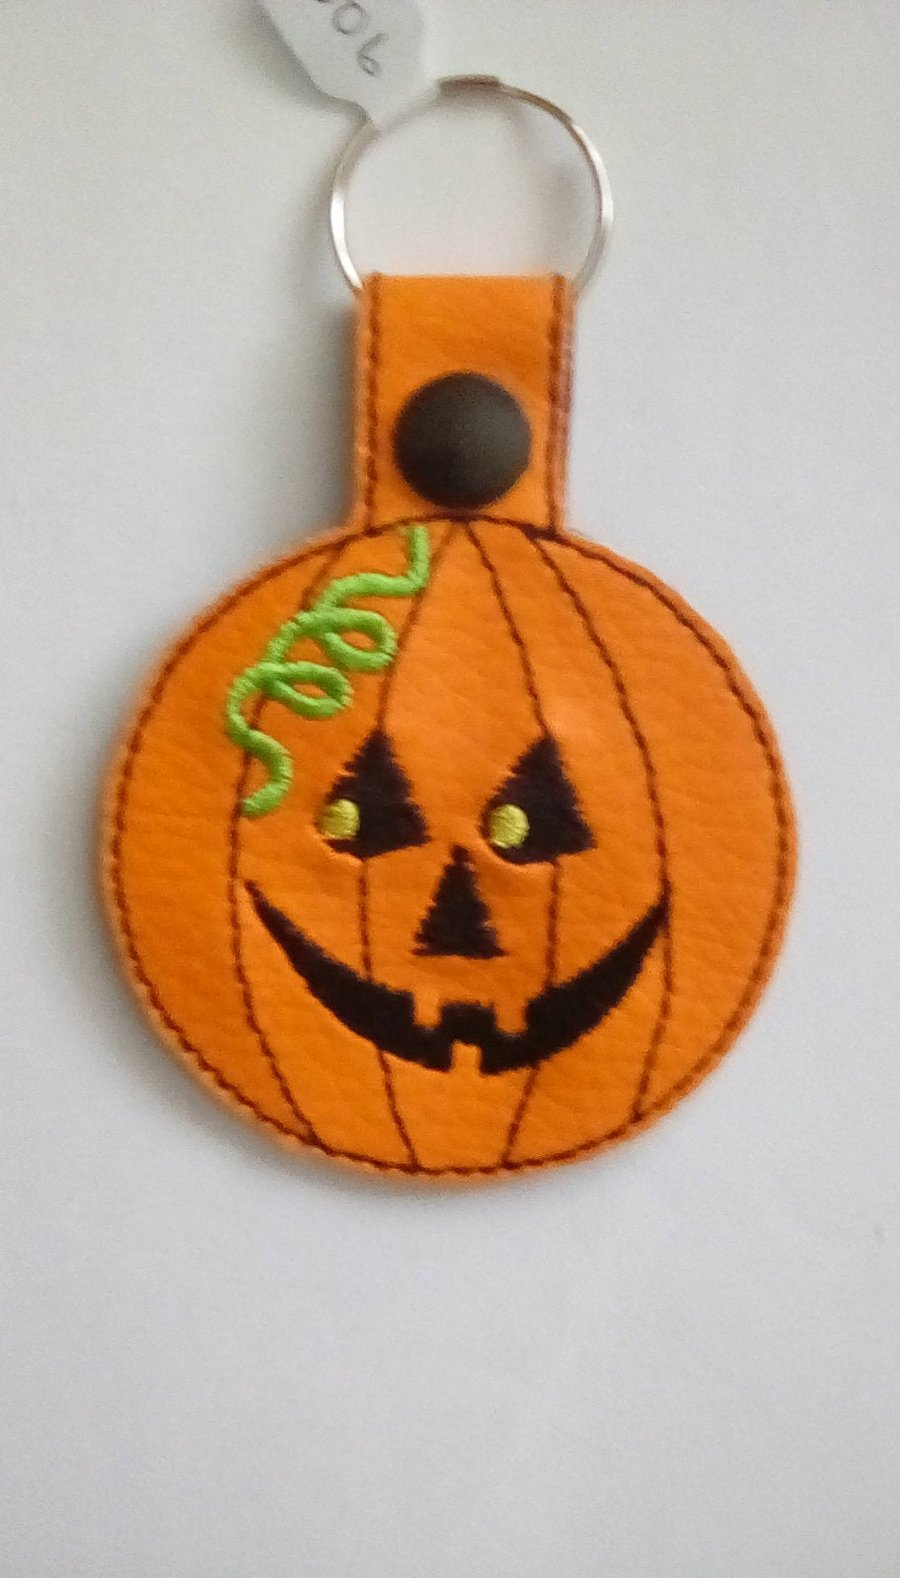 506. Halloween Jack O' Lantern - Pumpkin keyring.